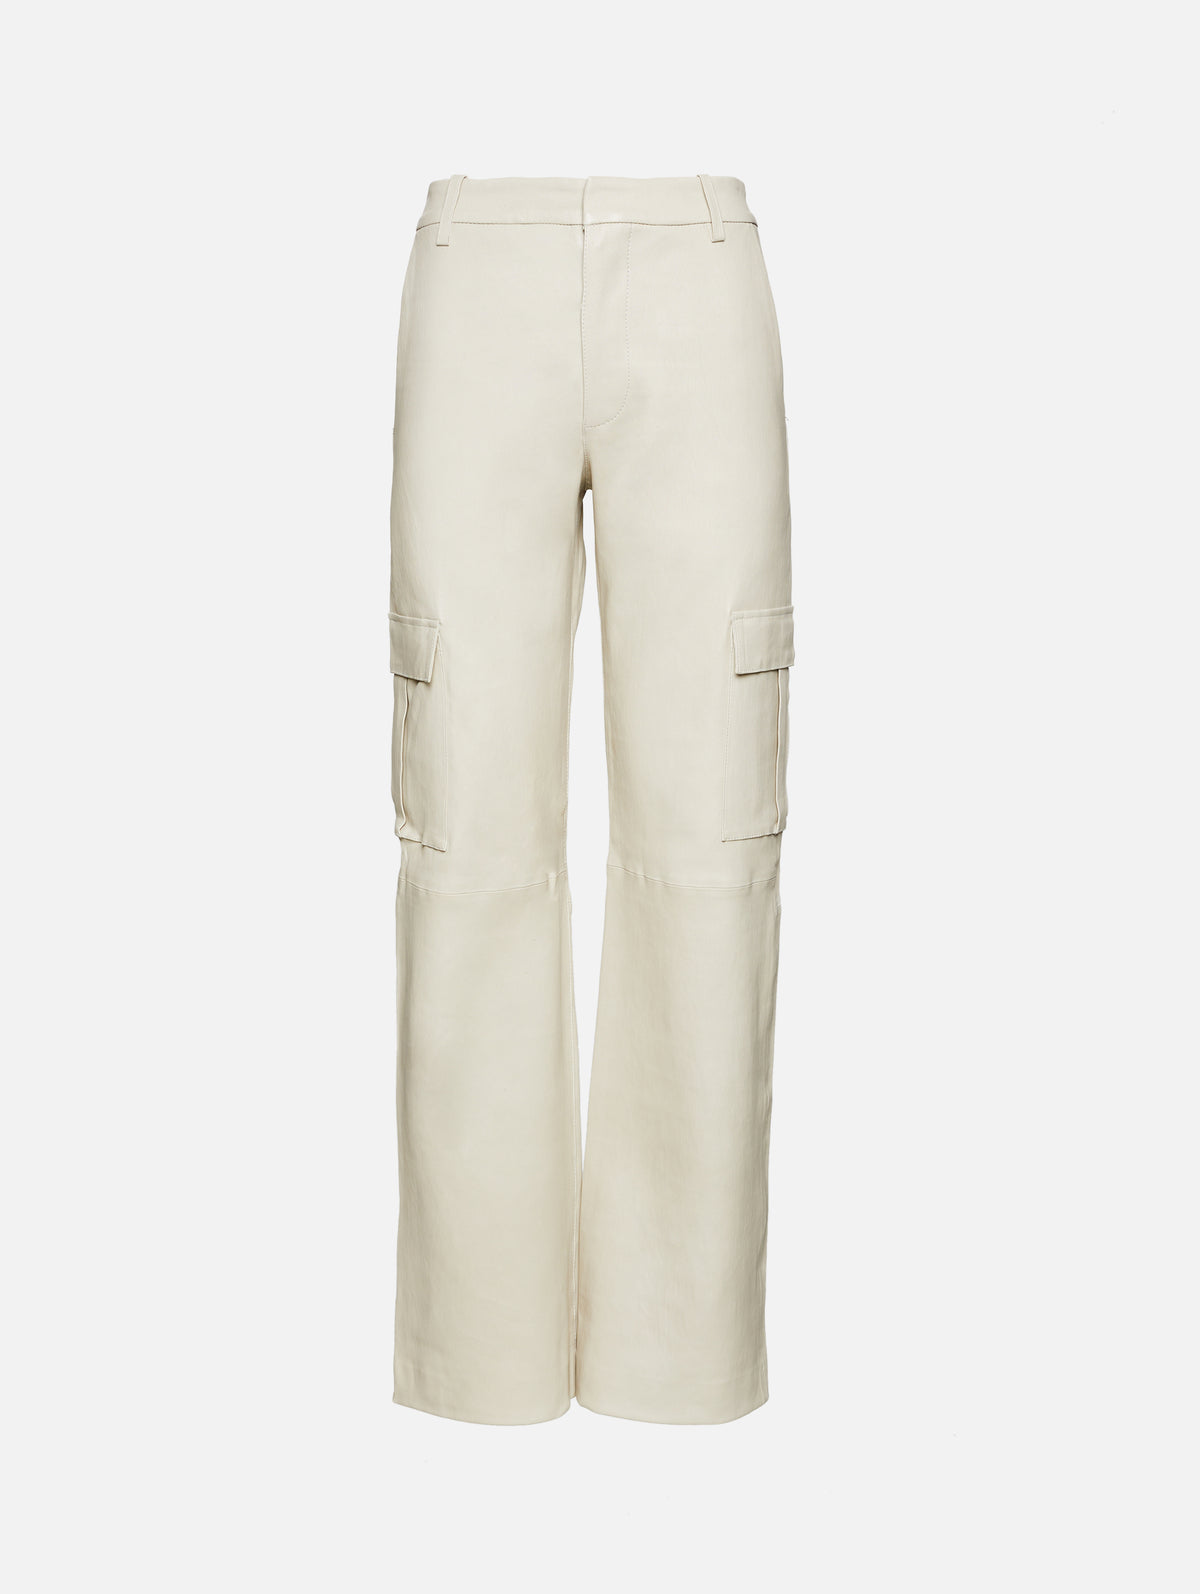 Louis Vuitton Cargo Pants